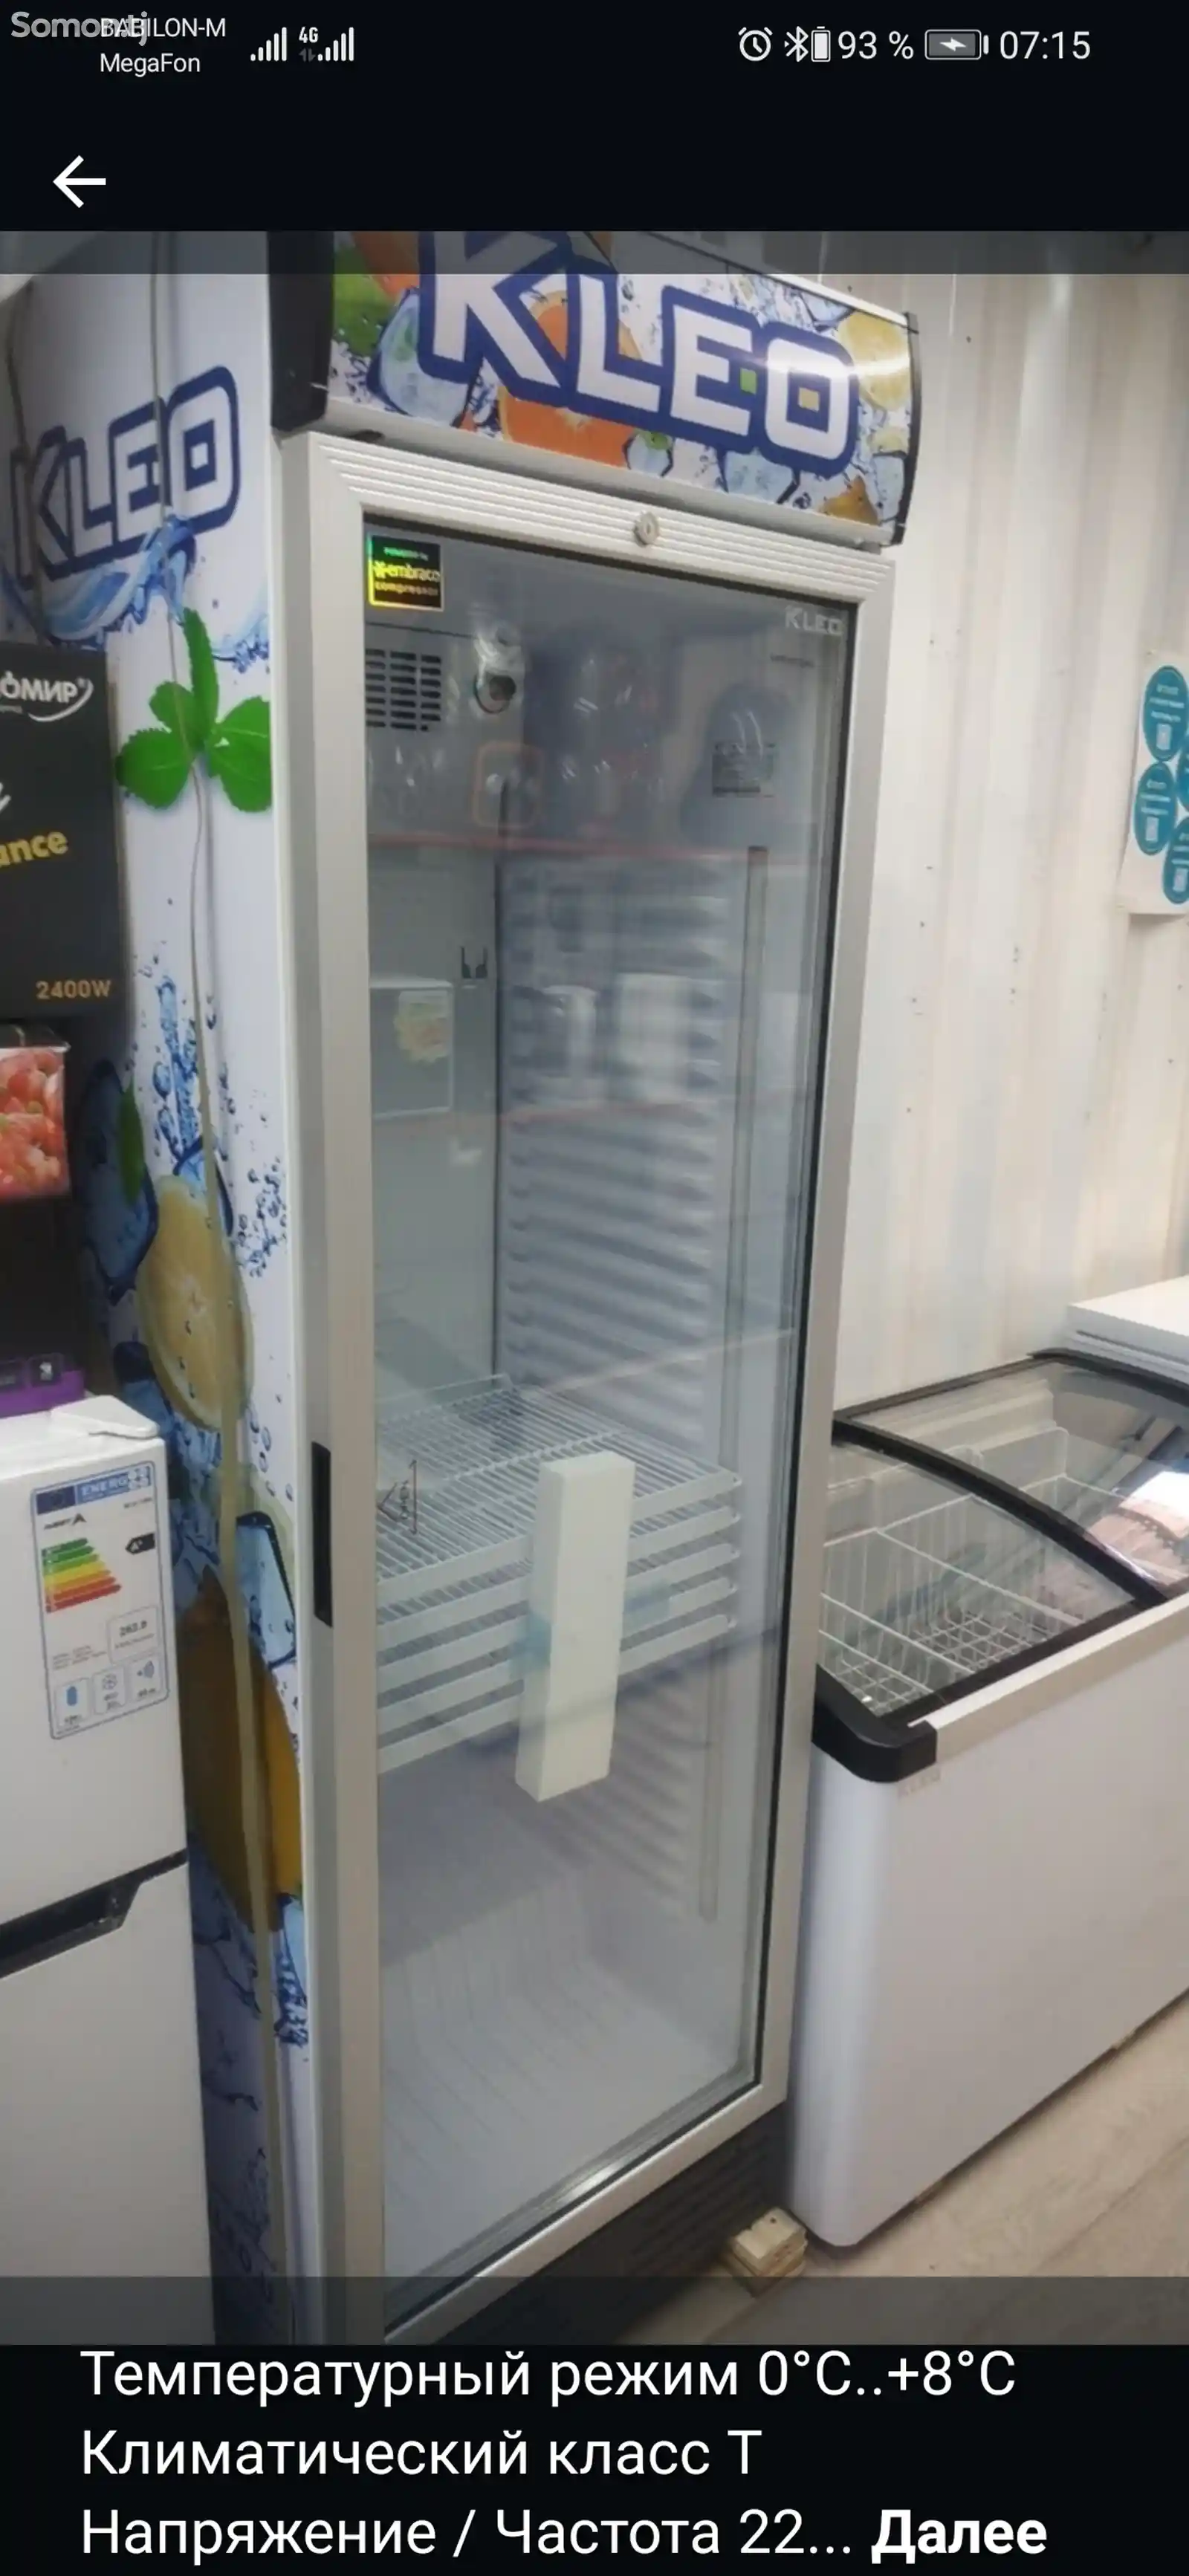 Витринный холодильник Kleo-5